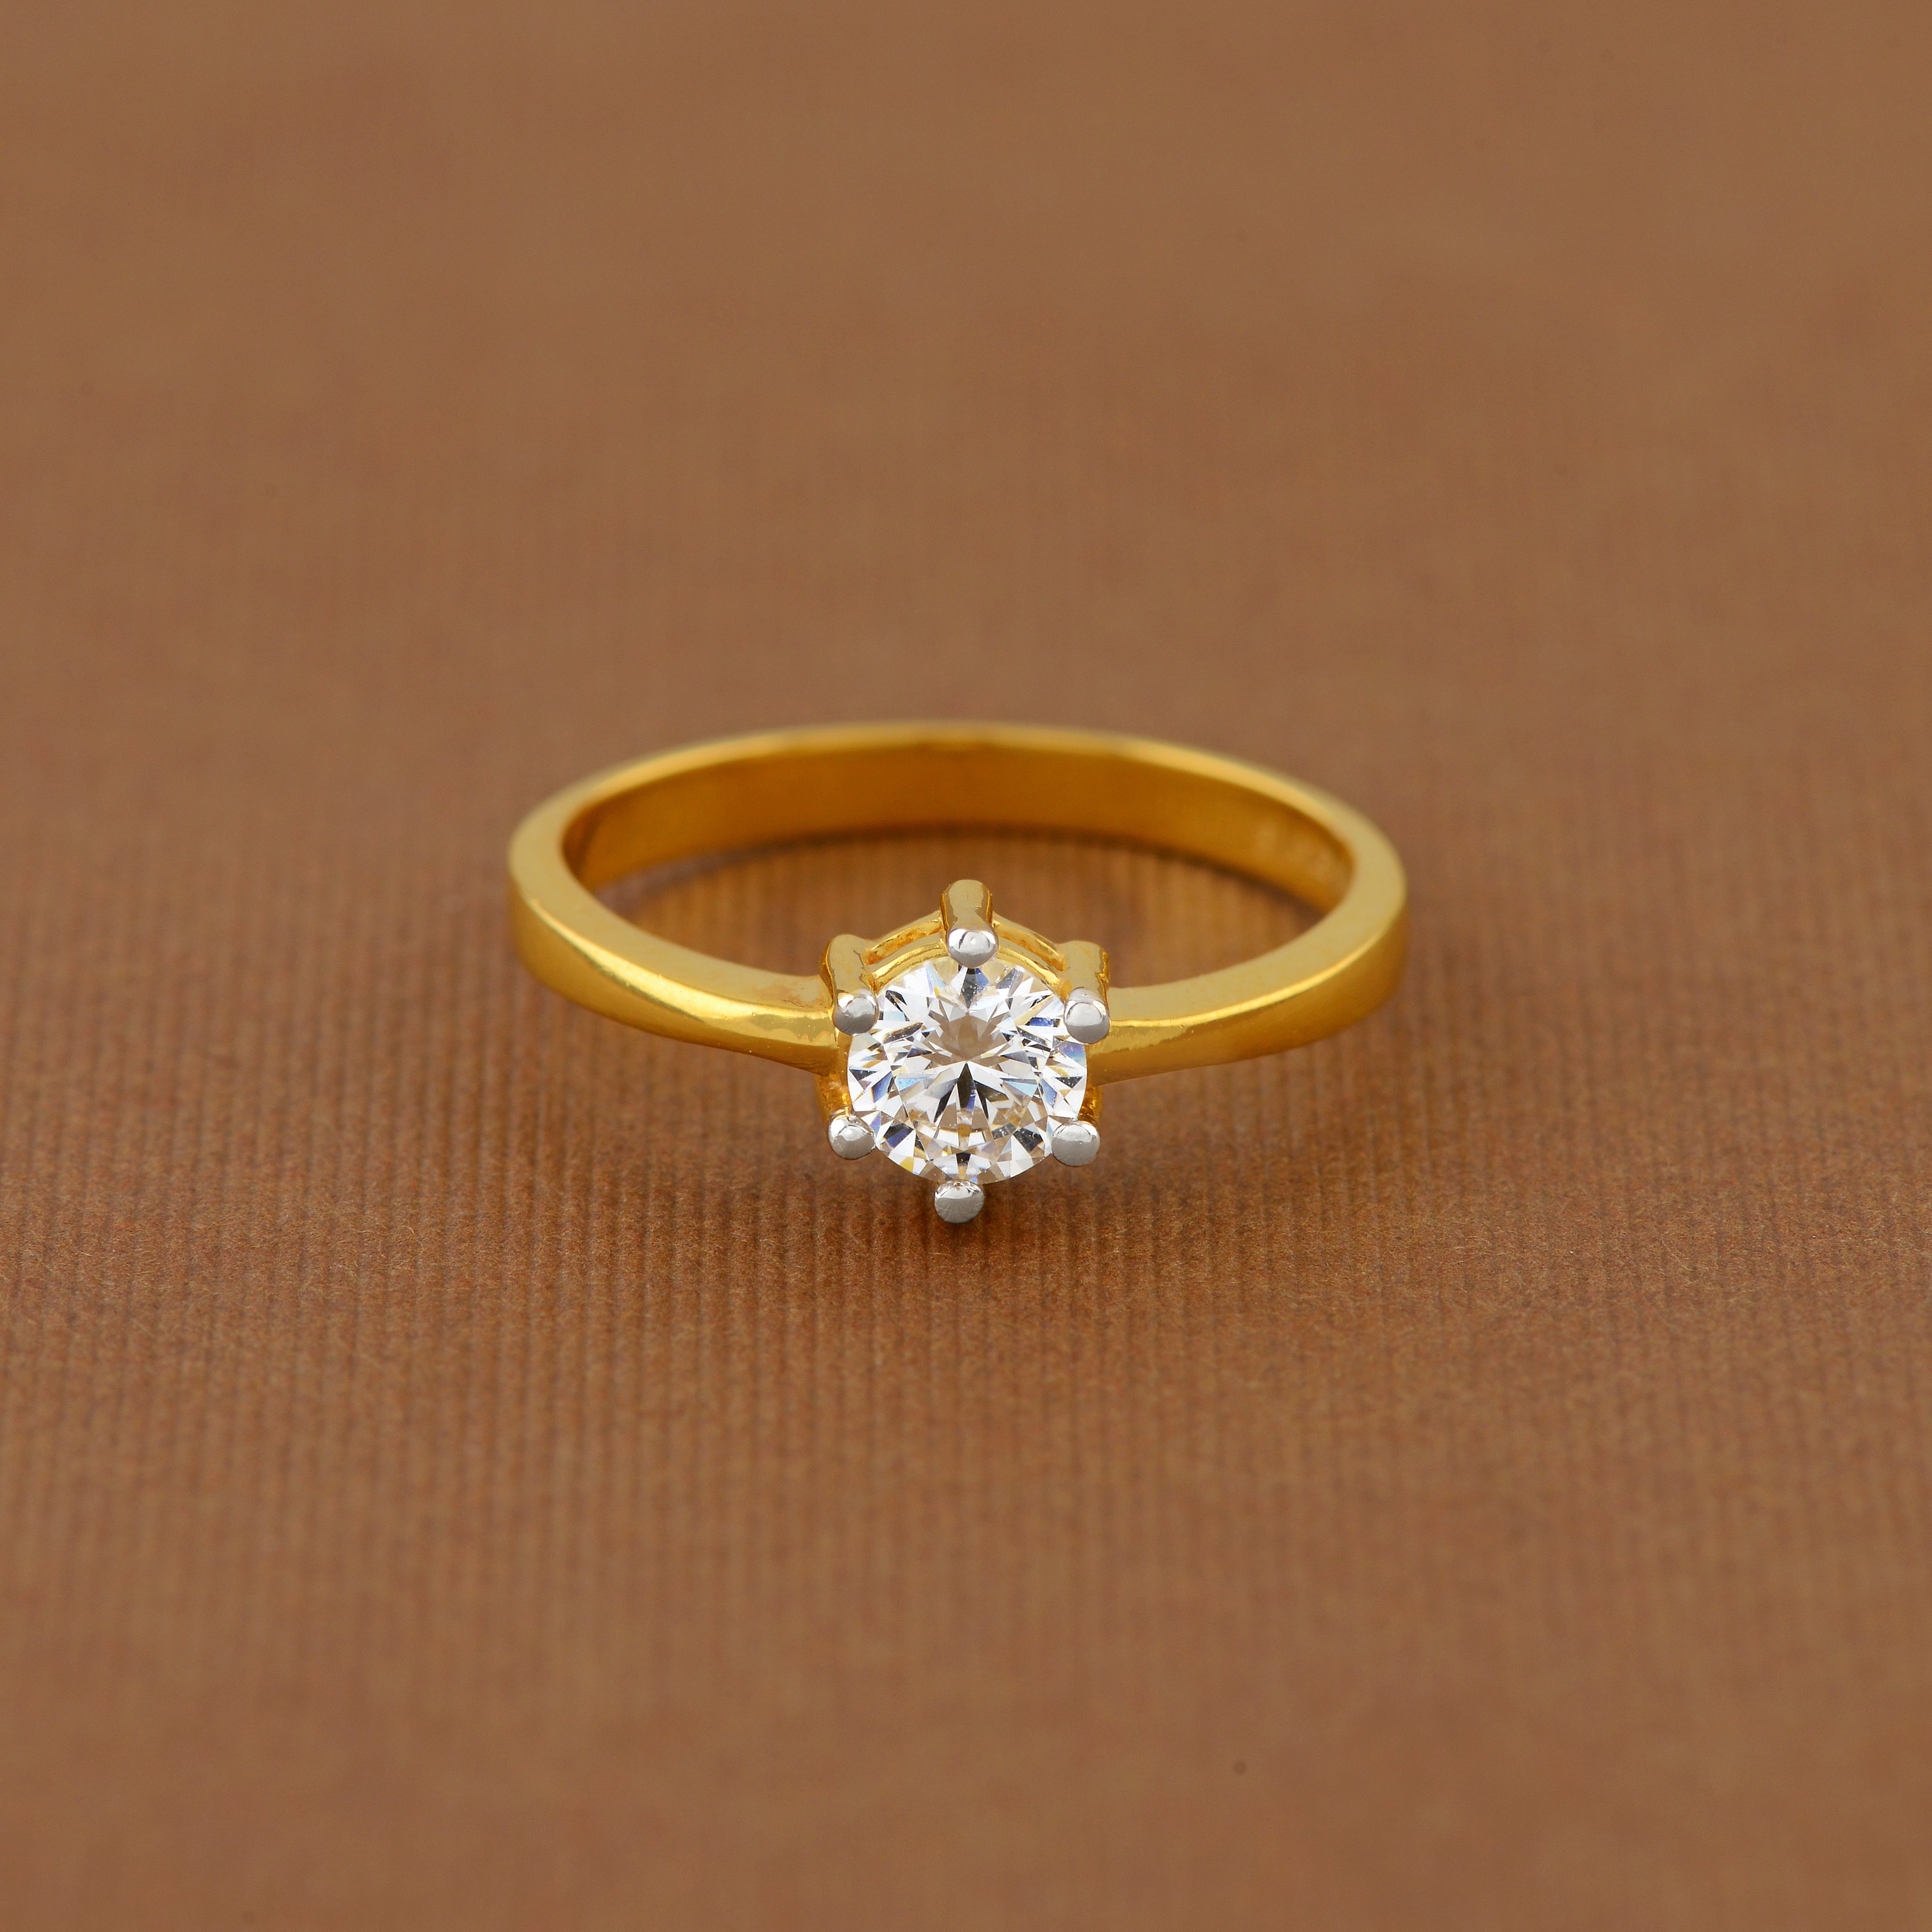 Inexpensive Women's Wedding Rings - Heart Shaped Wedding Ring | Heart engagement  rings, Heart shaped engagement rings, Heart wedding rings